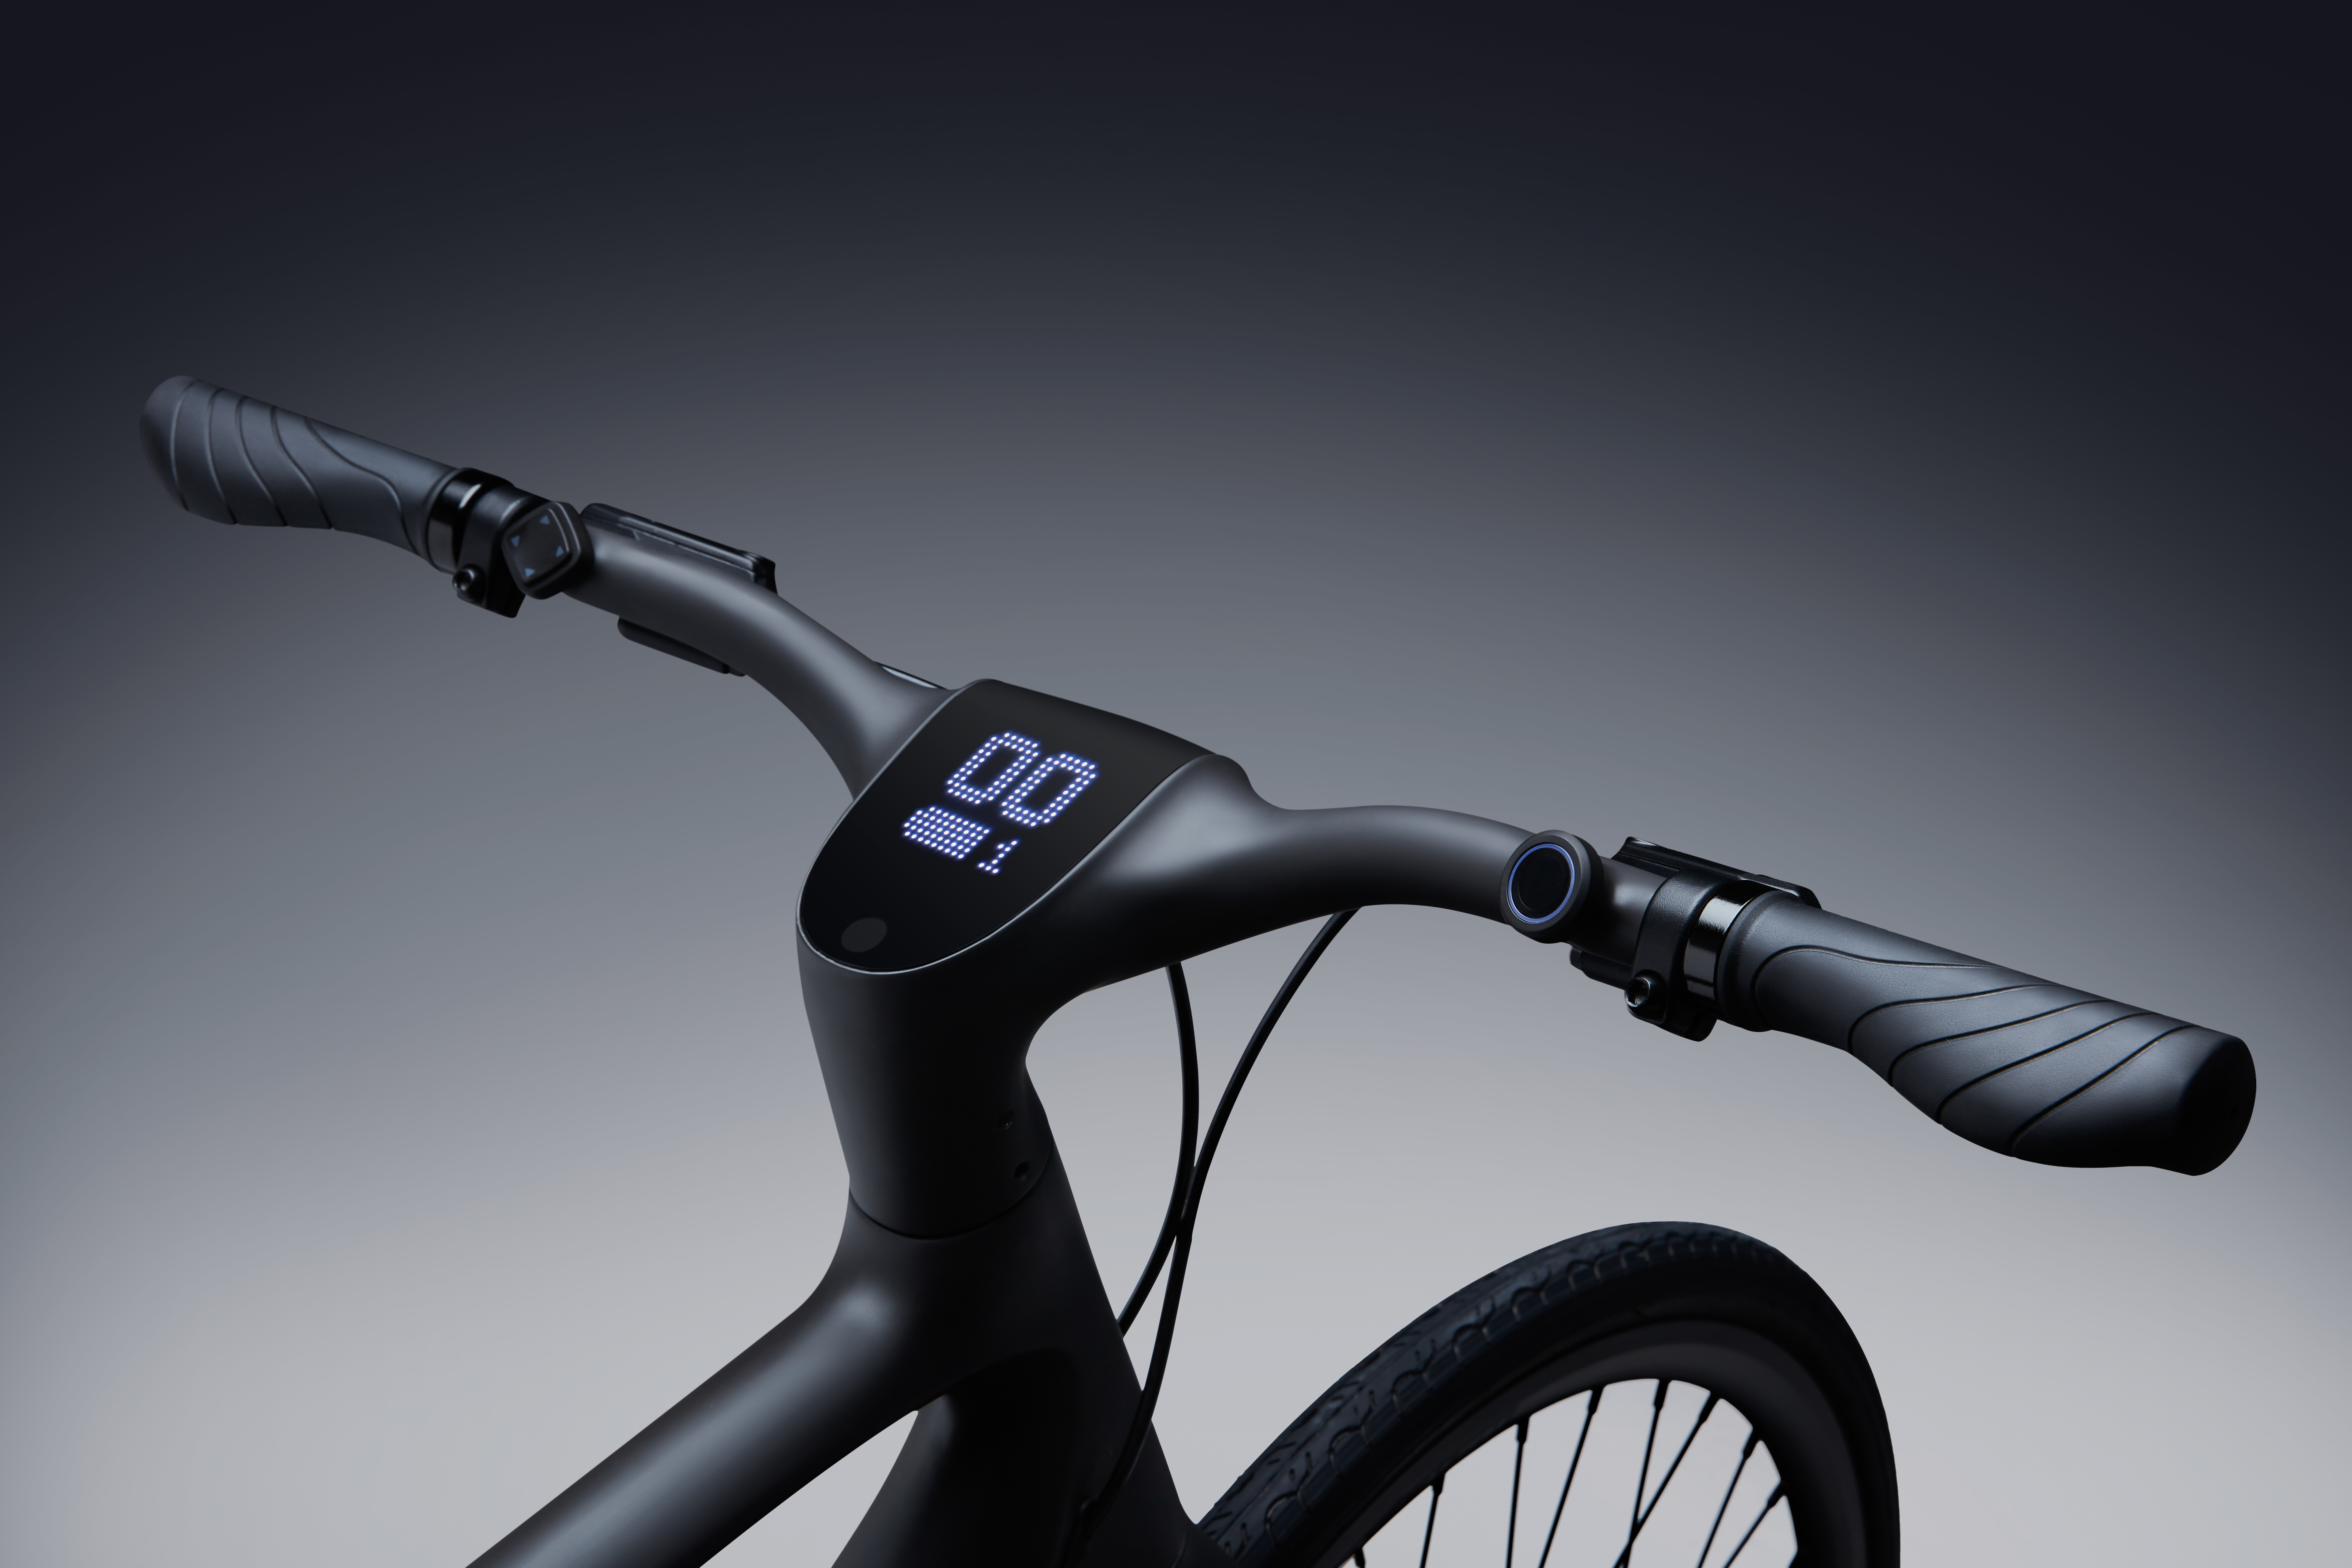 URTOPIA Leichtes Carbon Smart Lyra) Abnehmbaren Large mit 29 Unisex-Rad, E-Bike Citybike (Laufradgröße: Wh, 352.8 Akku Large, Zoll